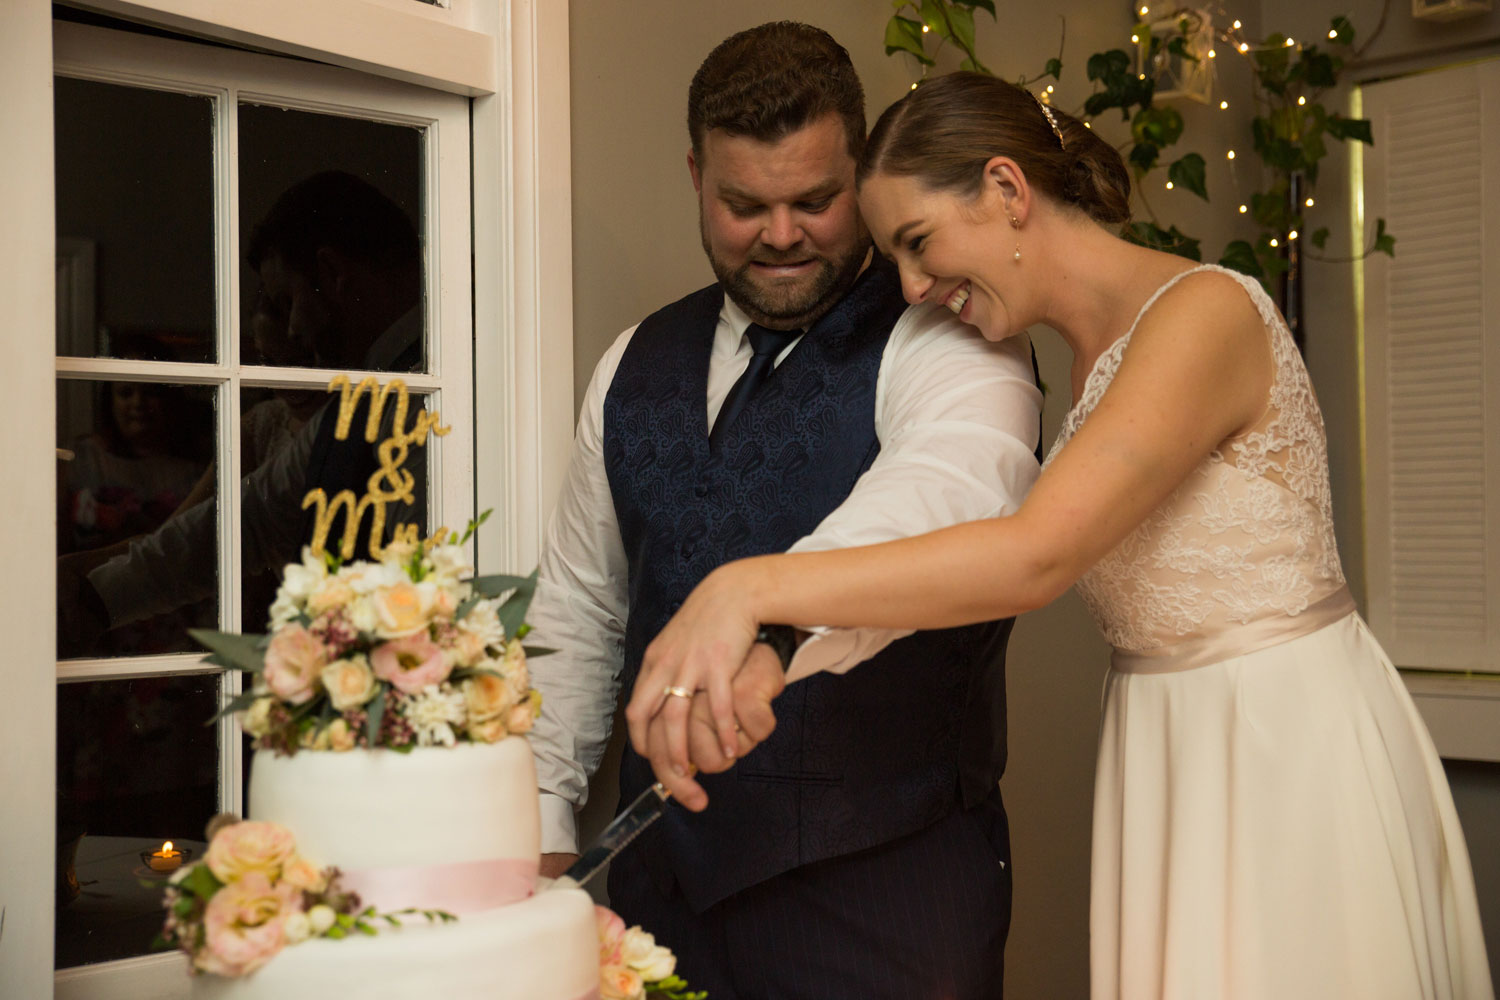 wedding photography auckland couple cut the cake